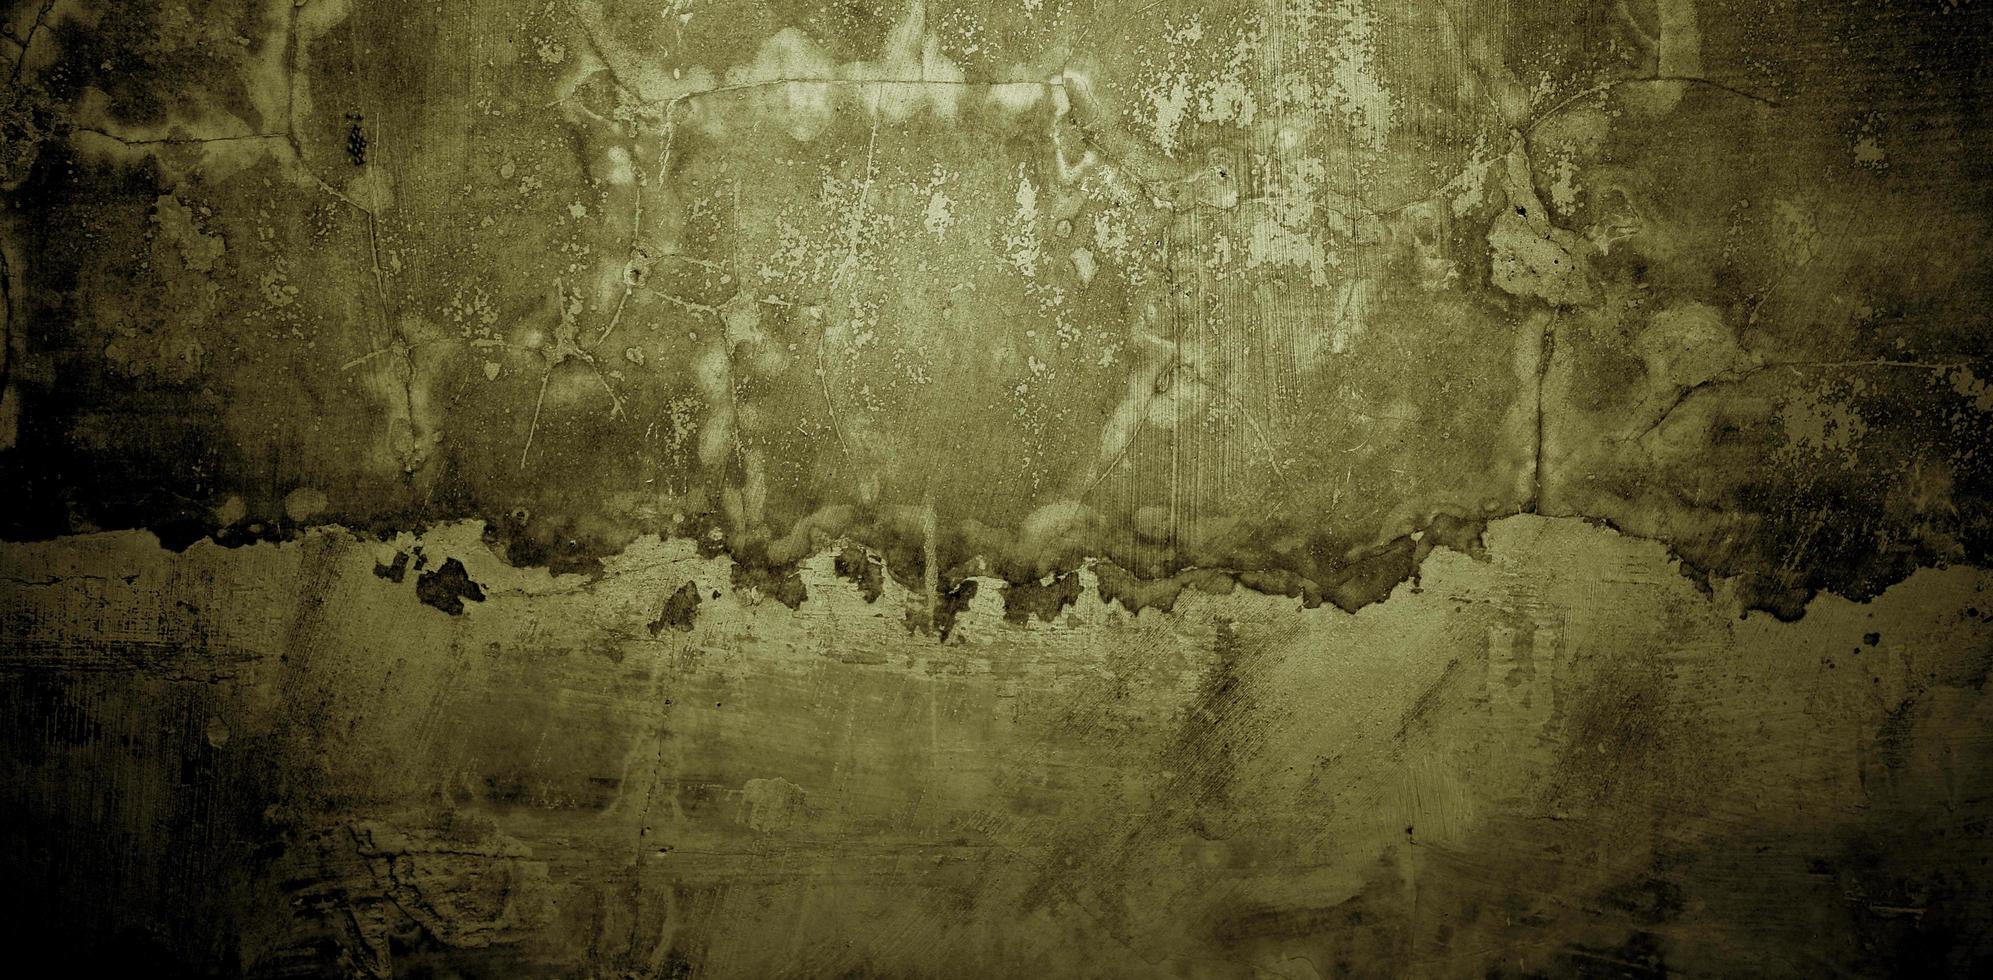 textura velha das paredes de concreto. paredes rachadas de estuque para o fundo foto